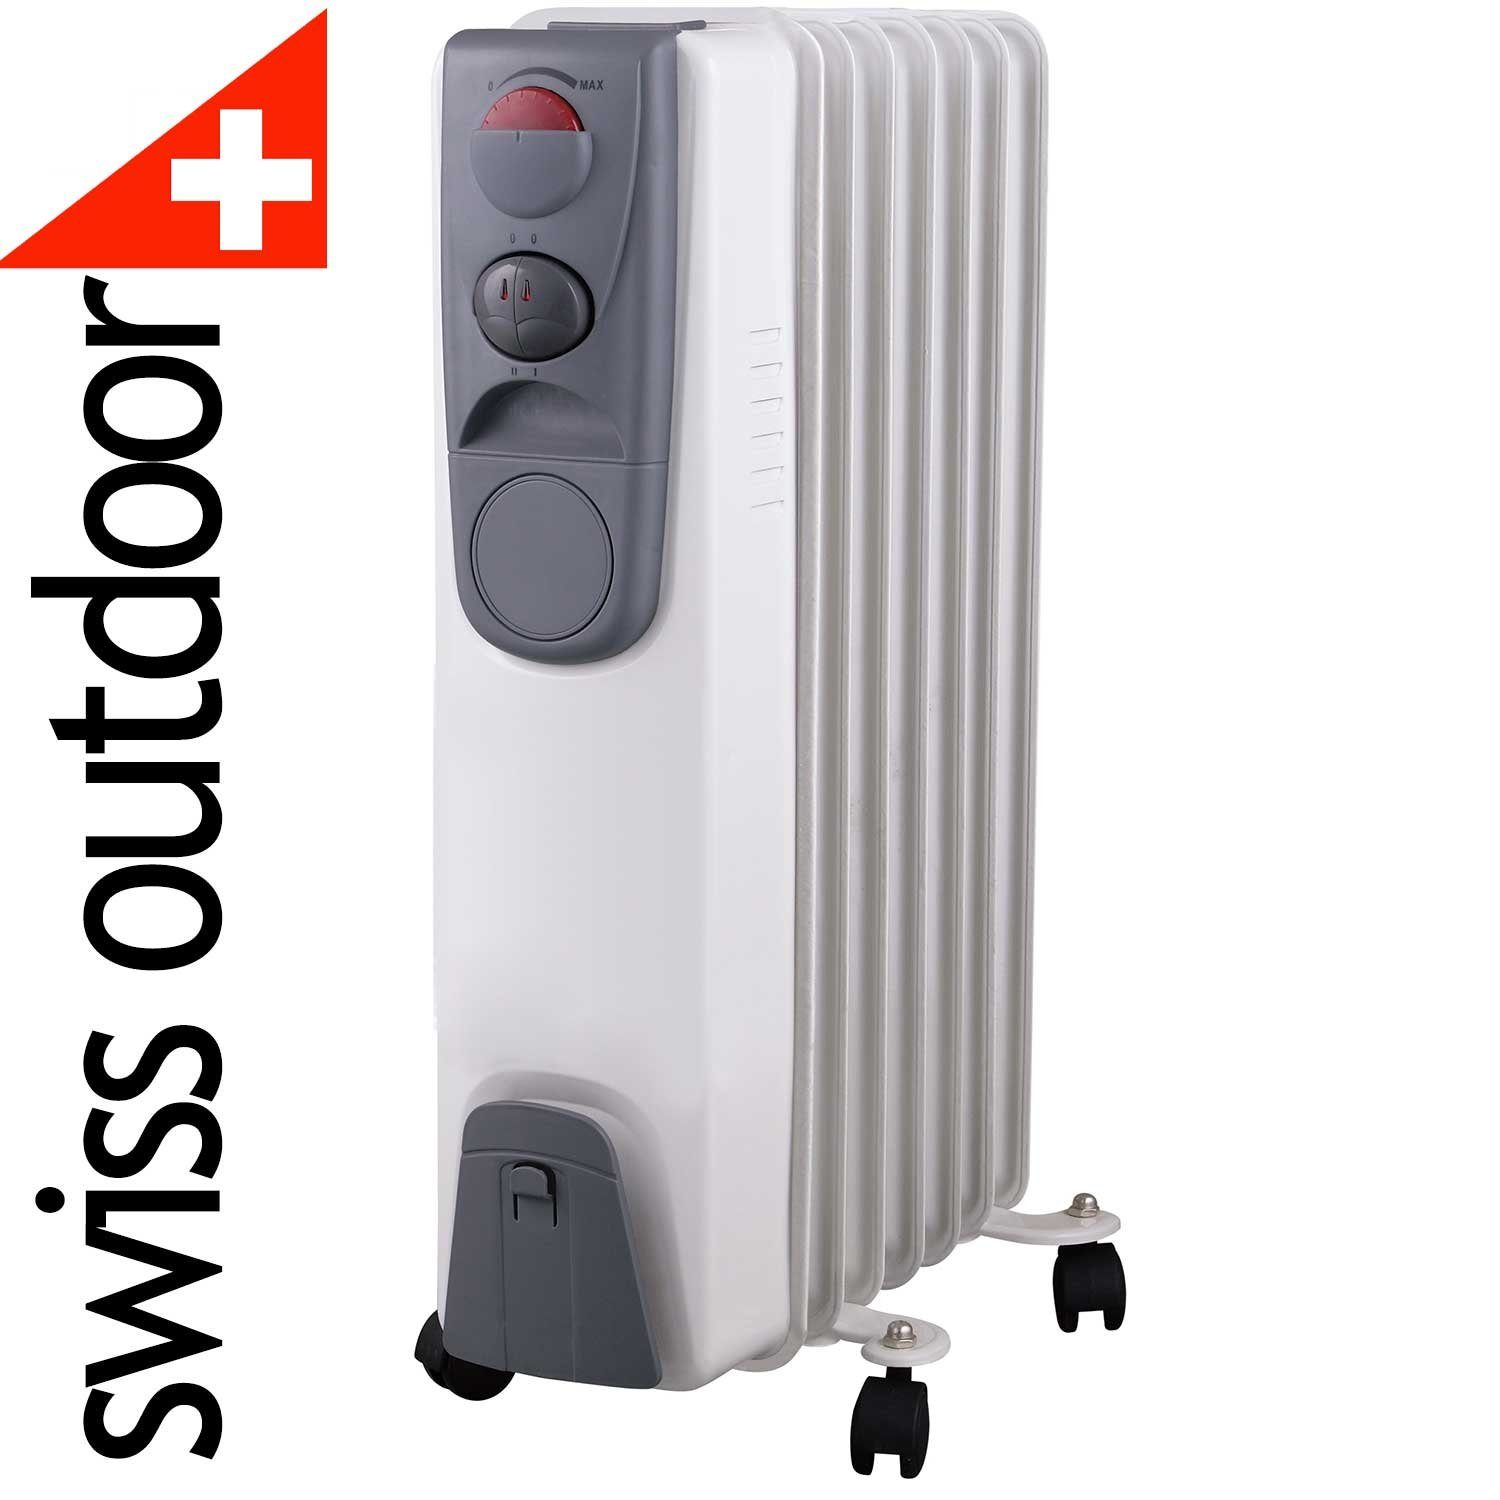 Swiss Outdoor Ölradiator 1500W Ölradiator 7 Finnen Ölheizung Mobile Heizung Elektrisch, Überhitzungsschutz, Anti-Kipp Sicherheitsfunktion, 3 Heizstufen